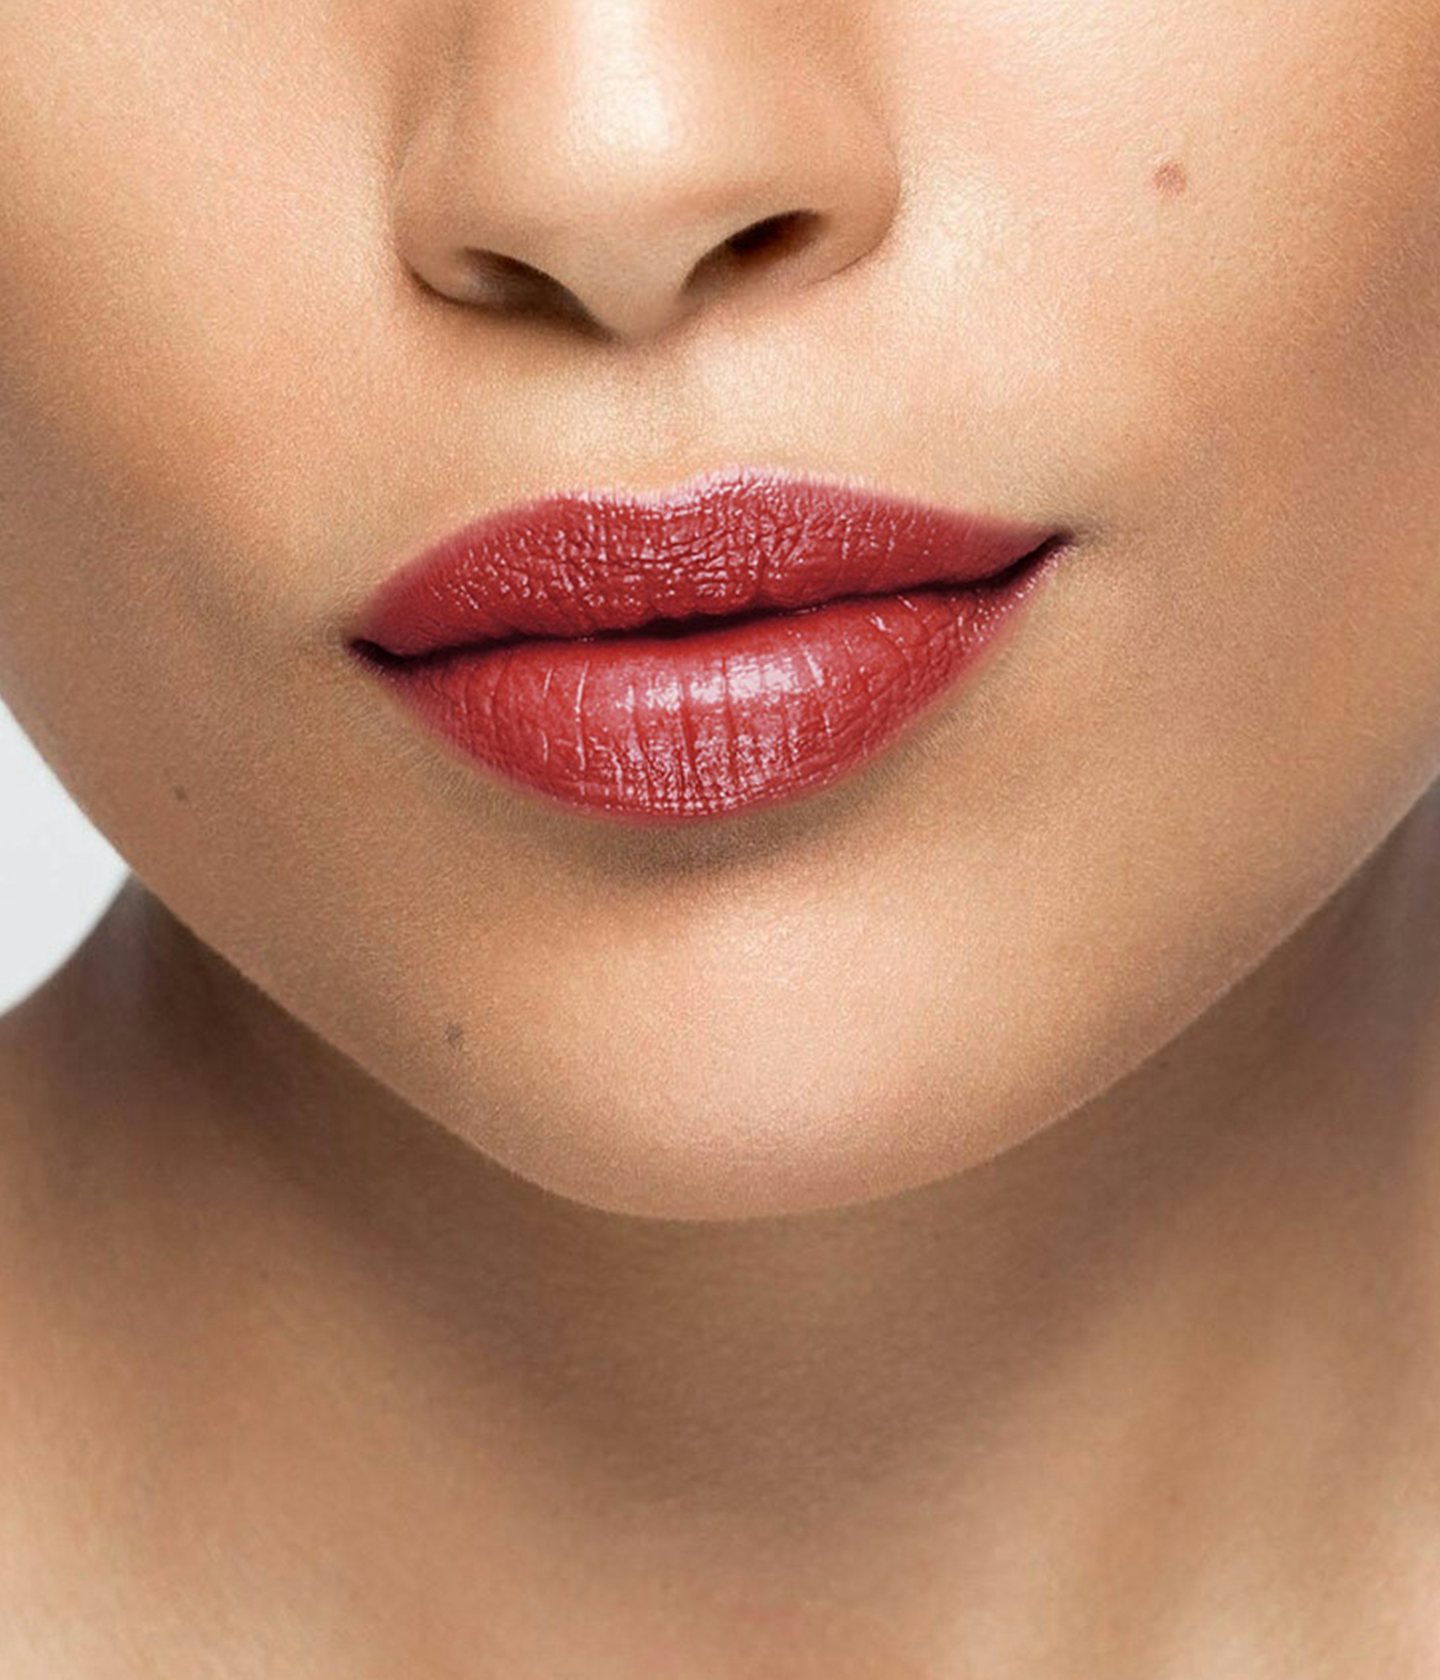 La bouche rouge SW1X lipstick shade on the lips of a medium skin model